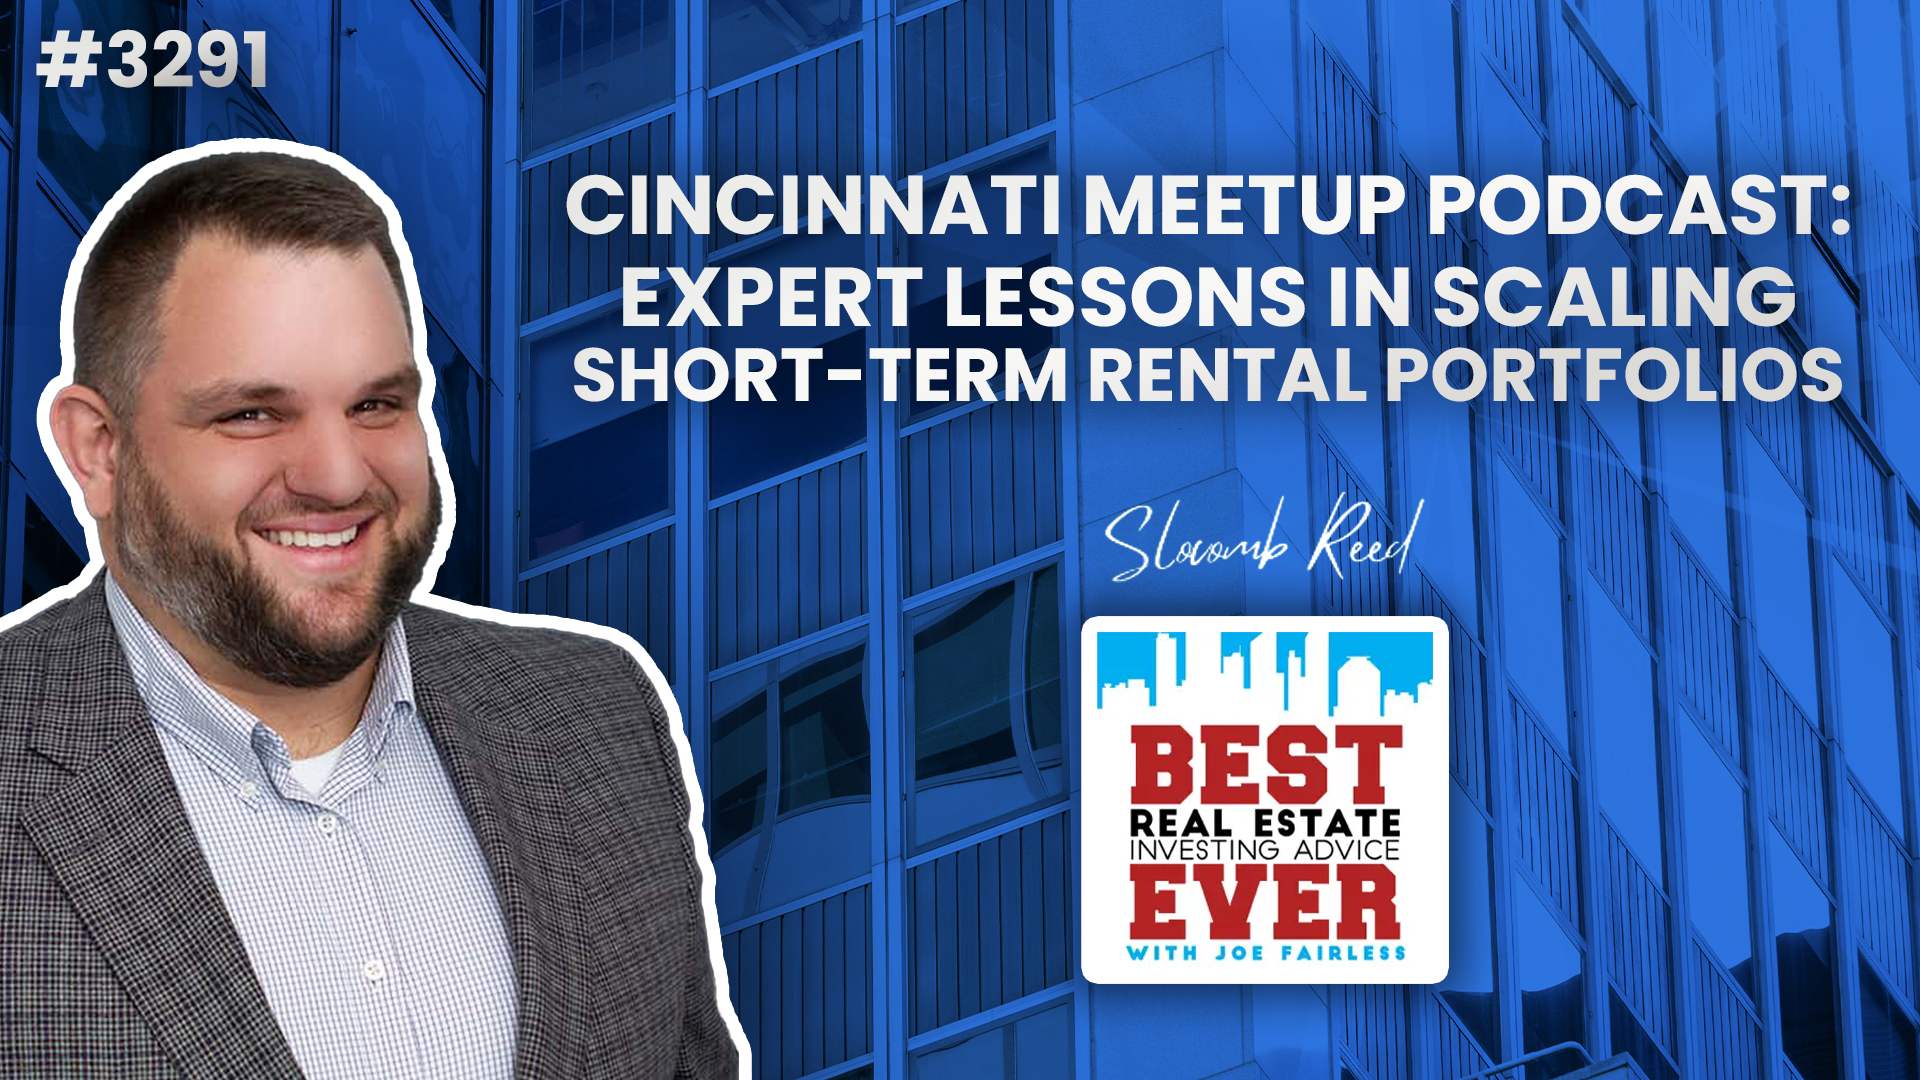 JF3291: Cincinnati Meetup Podcast: Expert Lessons in Scaling Short-Term Rental Portfolios